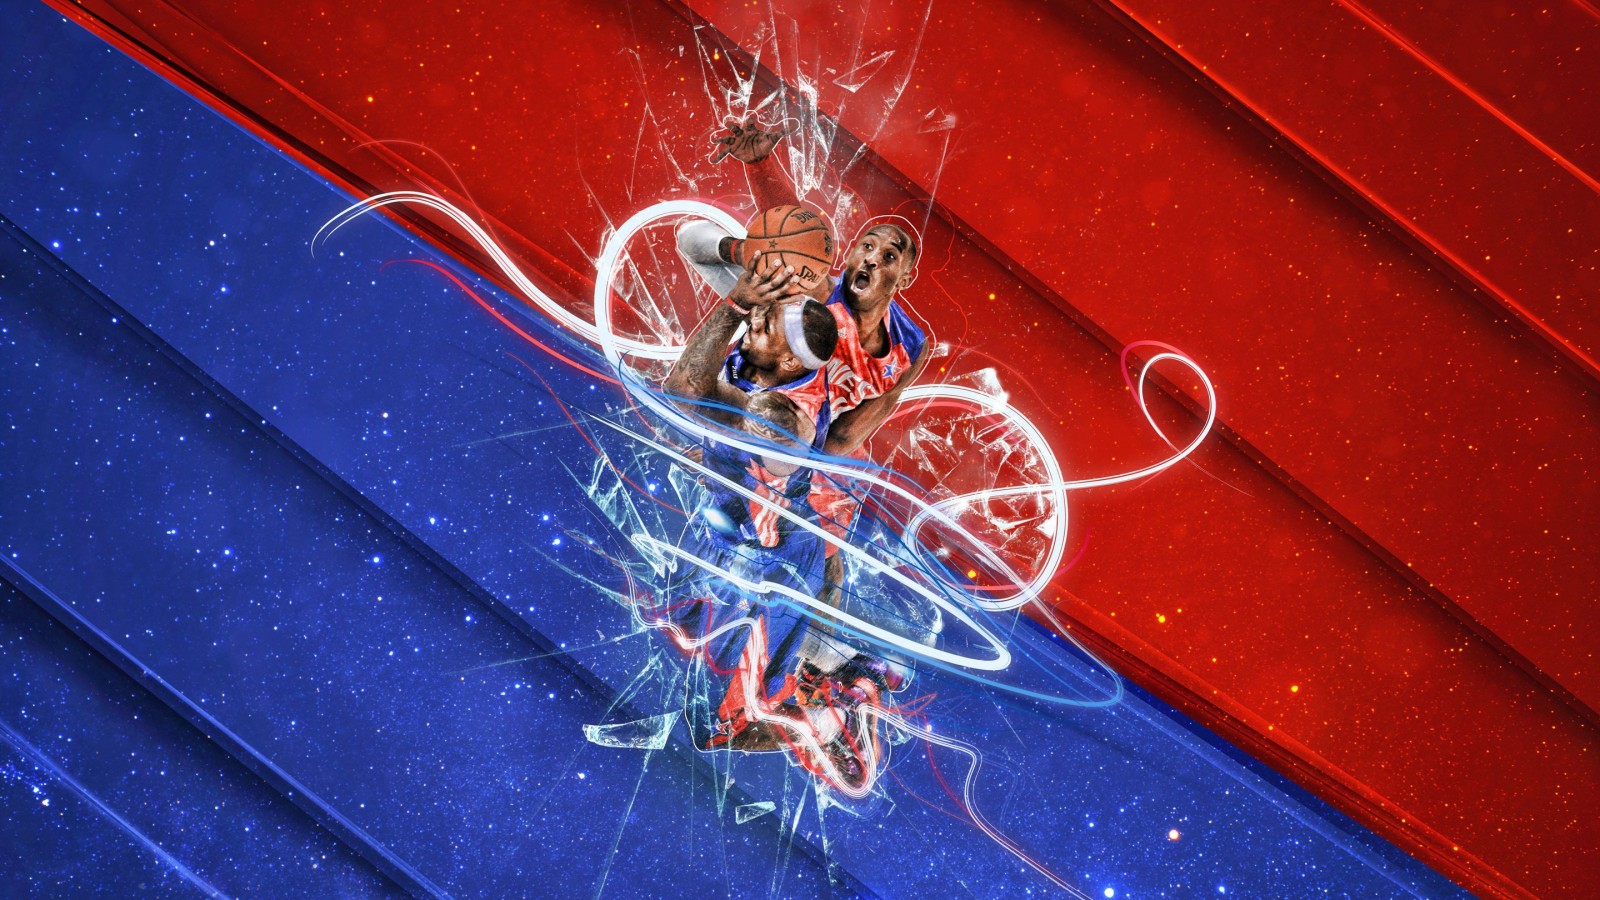 LeBron James Vs Kobe Bryant - NBA - Basketball Wallpaper for Desktop 1600x900